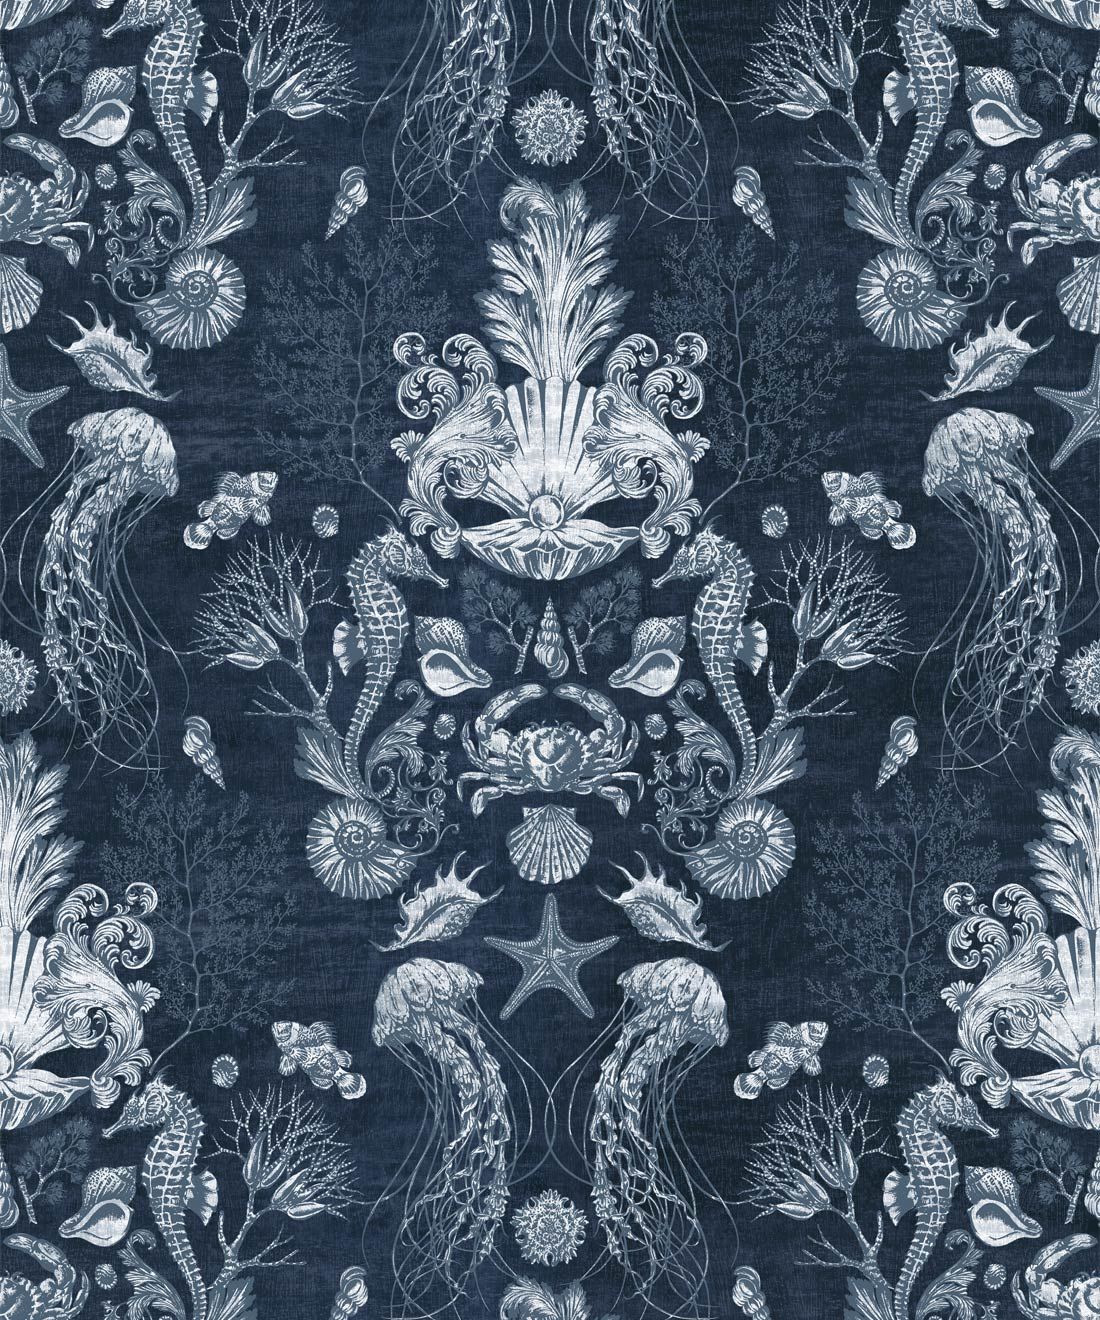 Oceania Damask Wallpaper • Sea Life Wallpaper with Seahorses, Starfish, Jellyfish • Iryna Ruggeri • Blue • Swatch